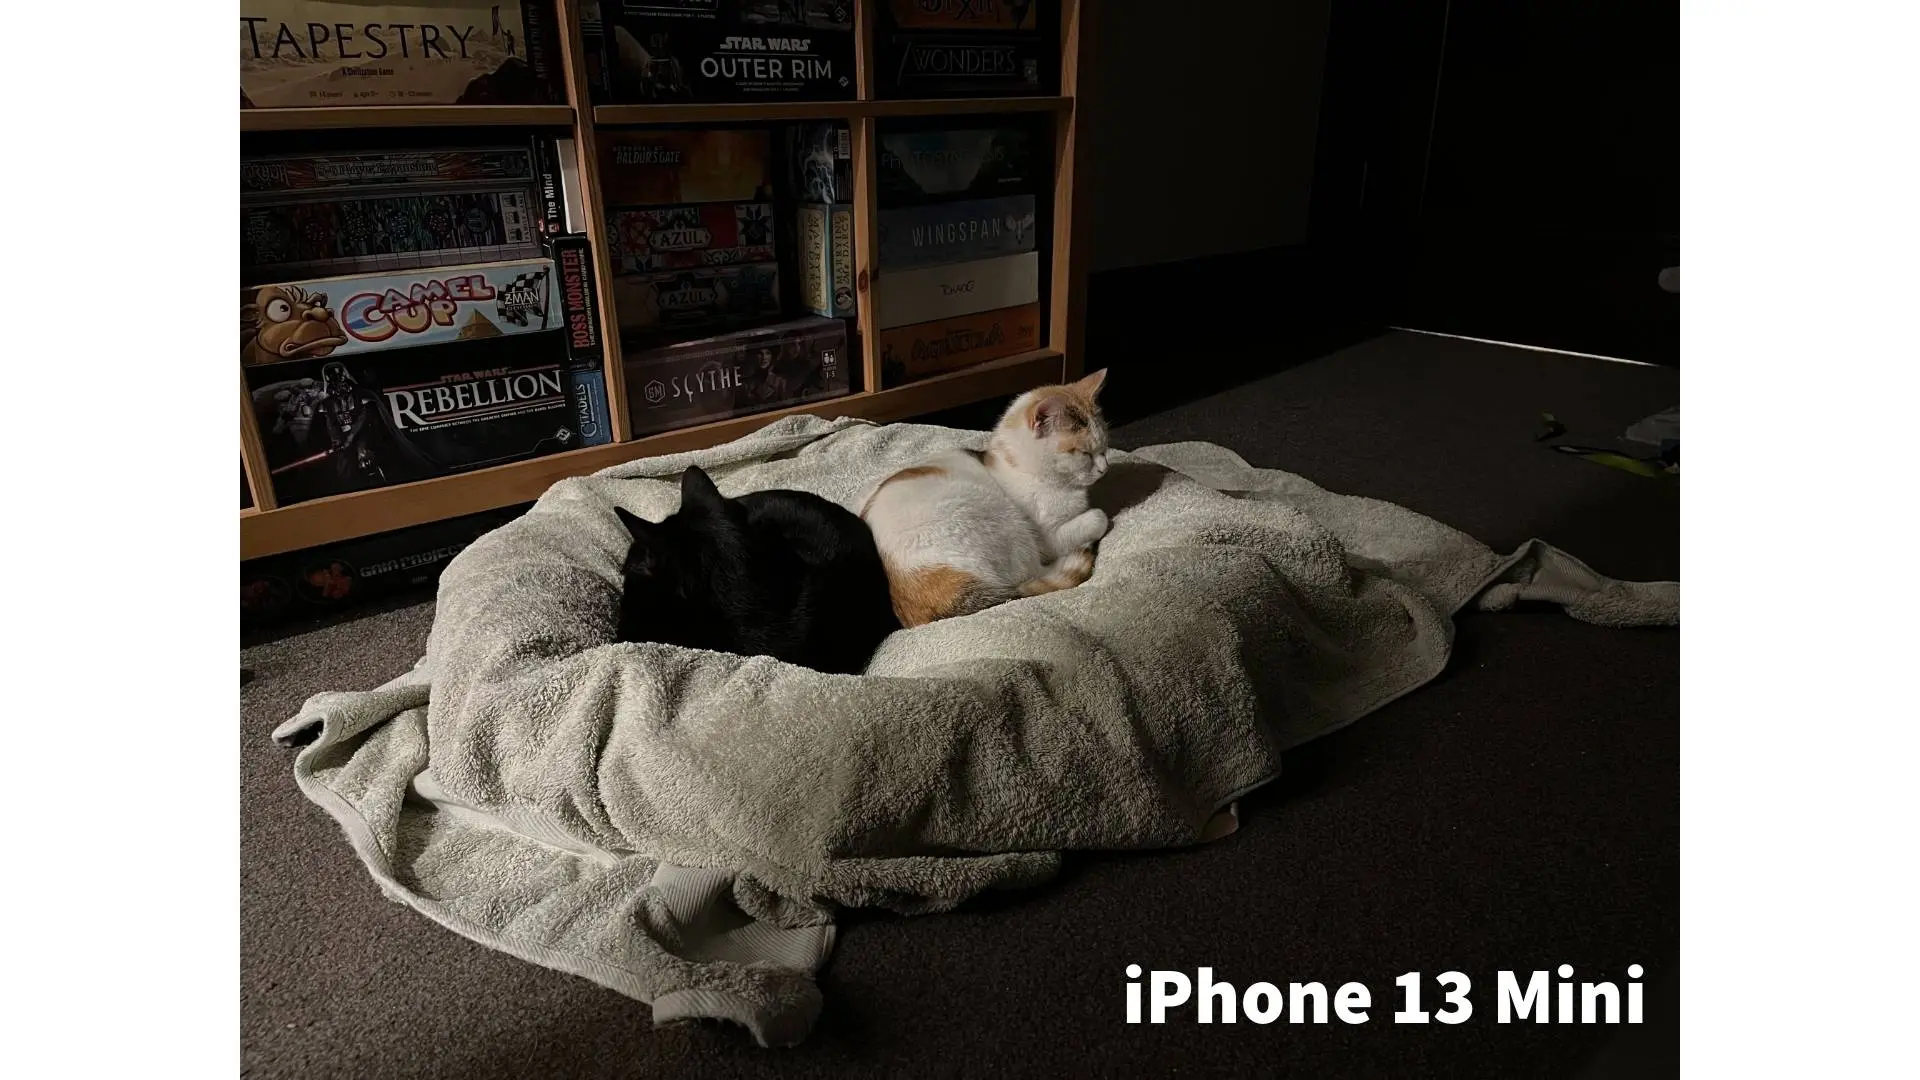 iPhone 13 Mini review